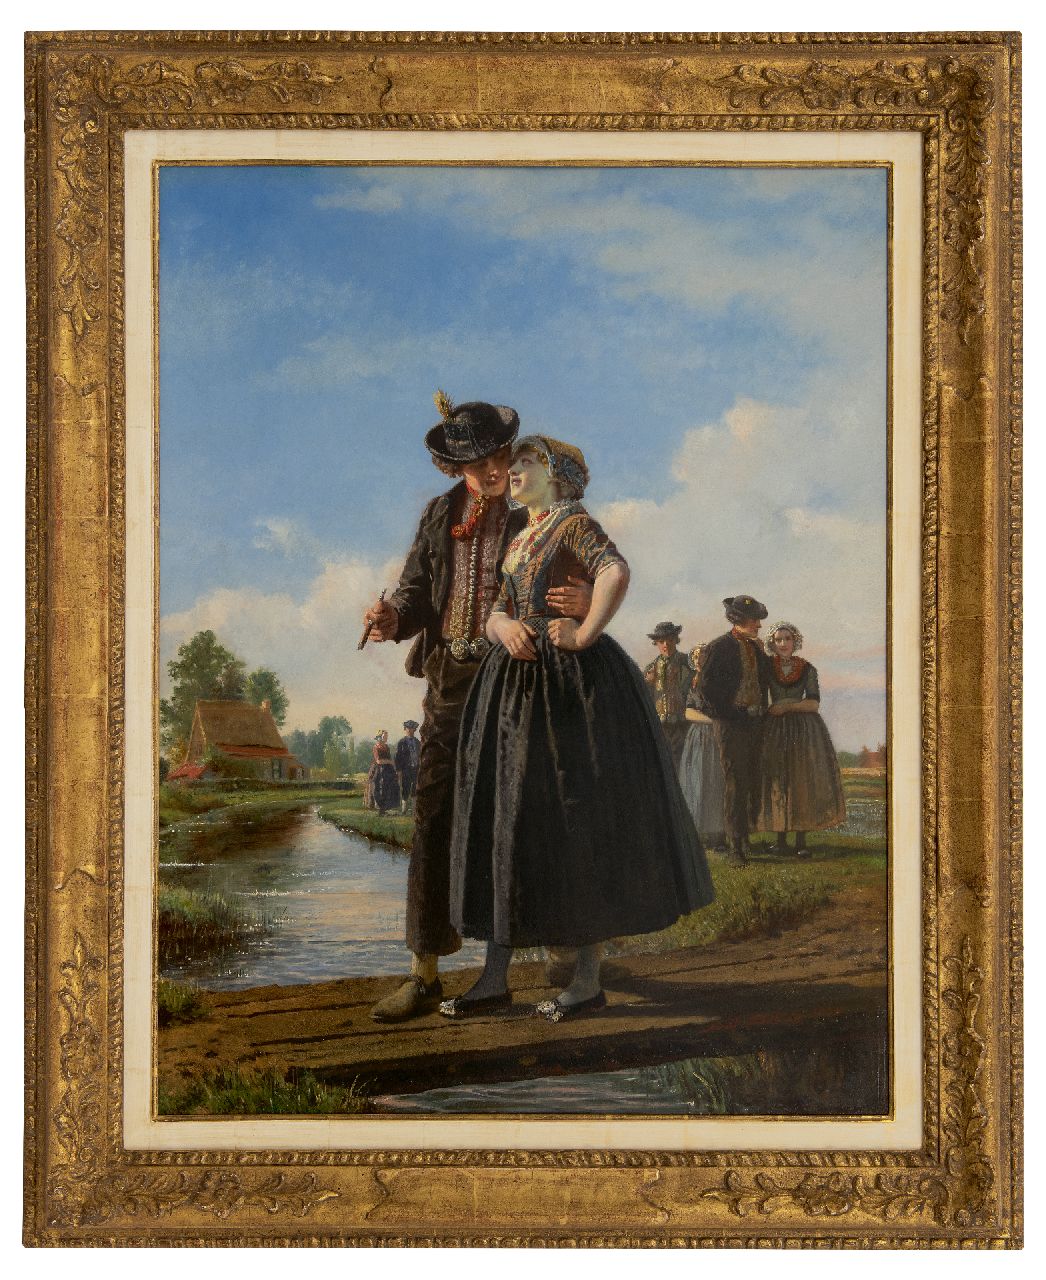 Dillens A.A.  | 'Adolf' Alexander Dillens | Paintings offered for sale | La traversée du pont d'amour, oil on panel 78.5 x 60.0 cm, signed l.r. and dated 1855